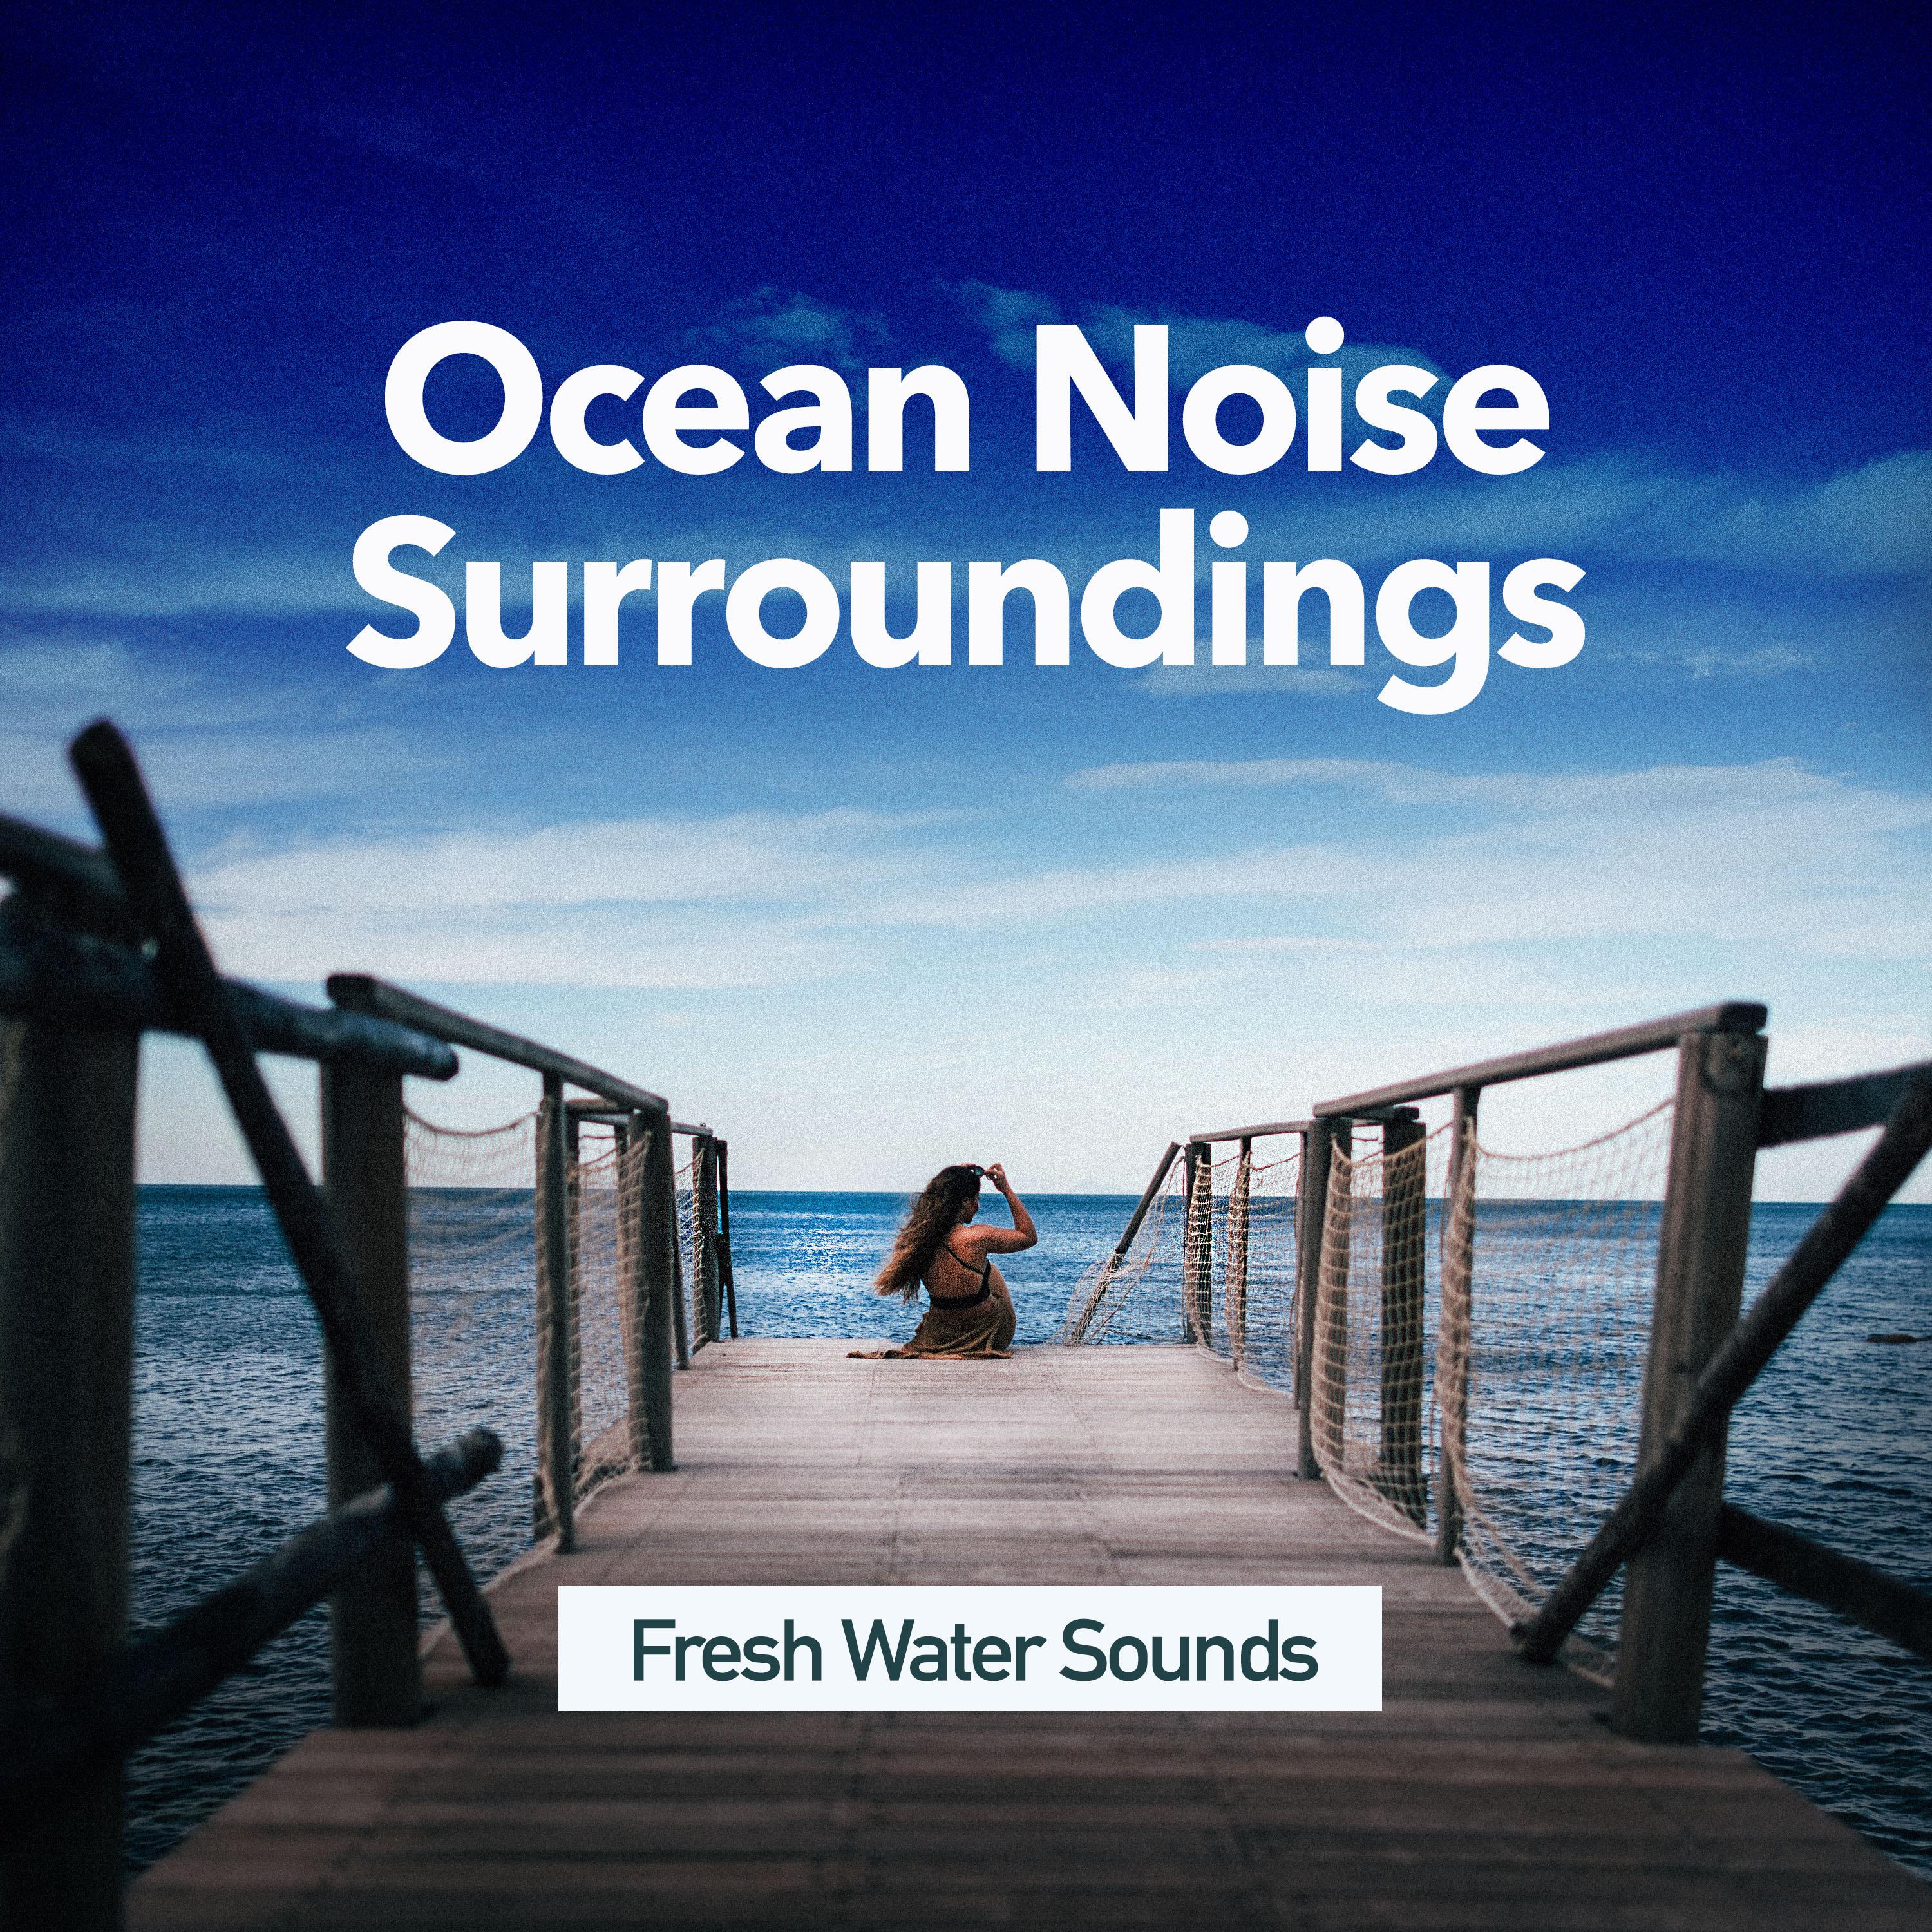 Ocean Noise Surroundings